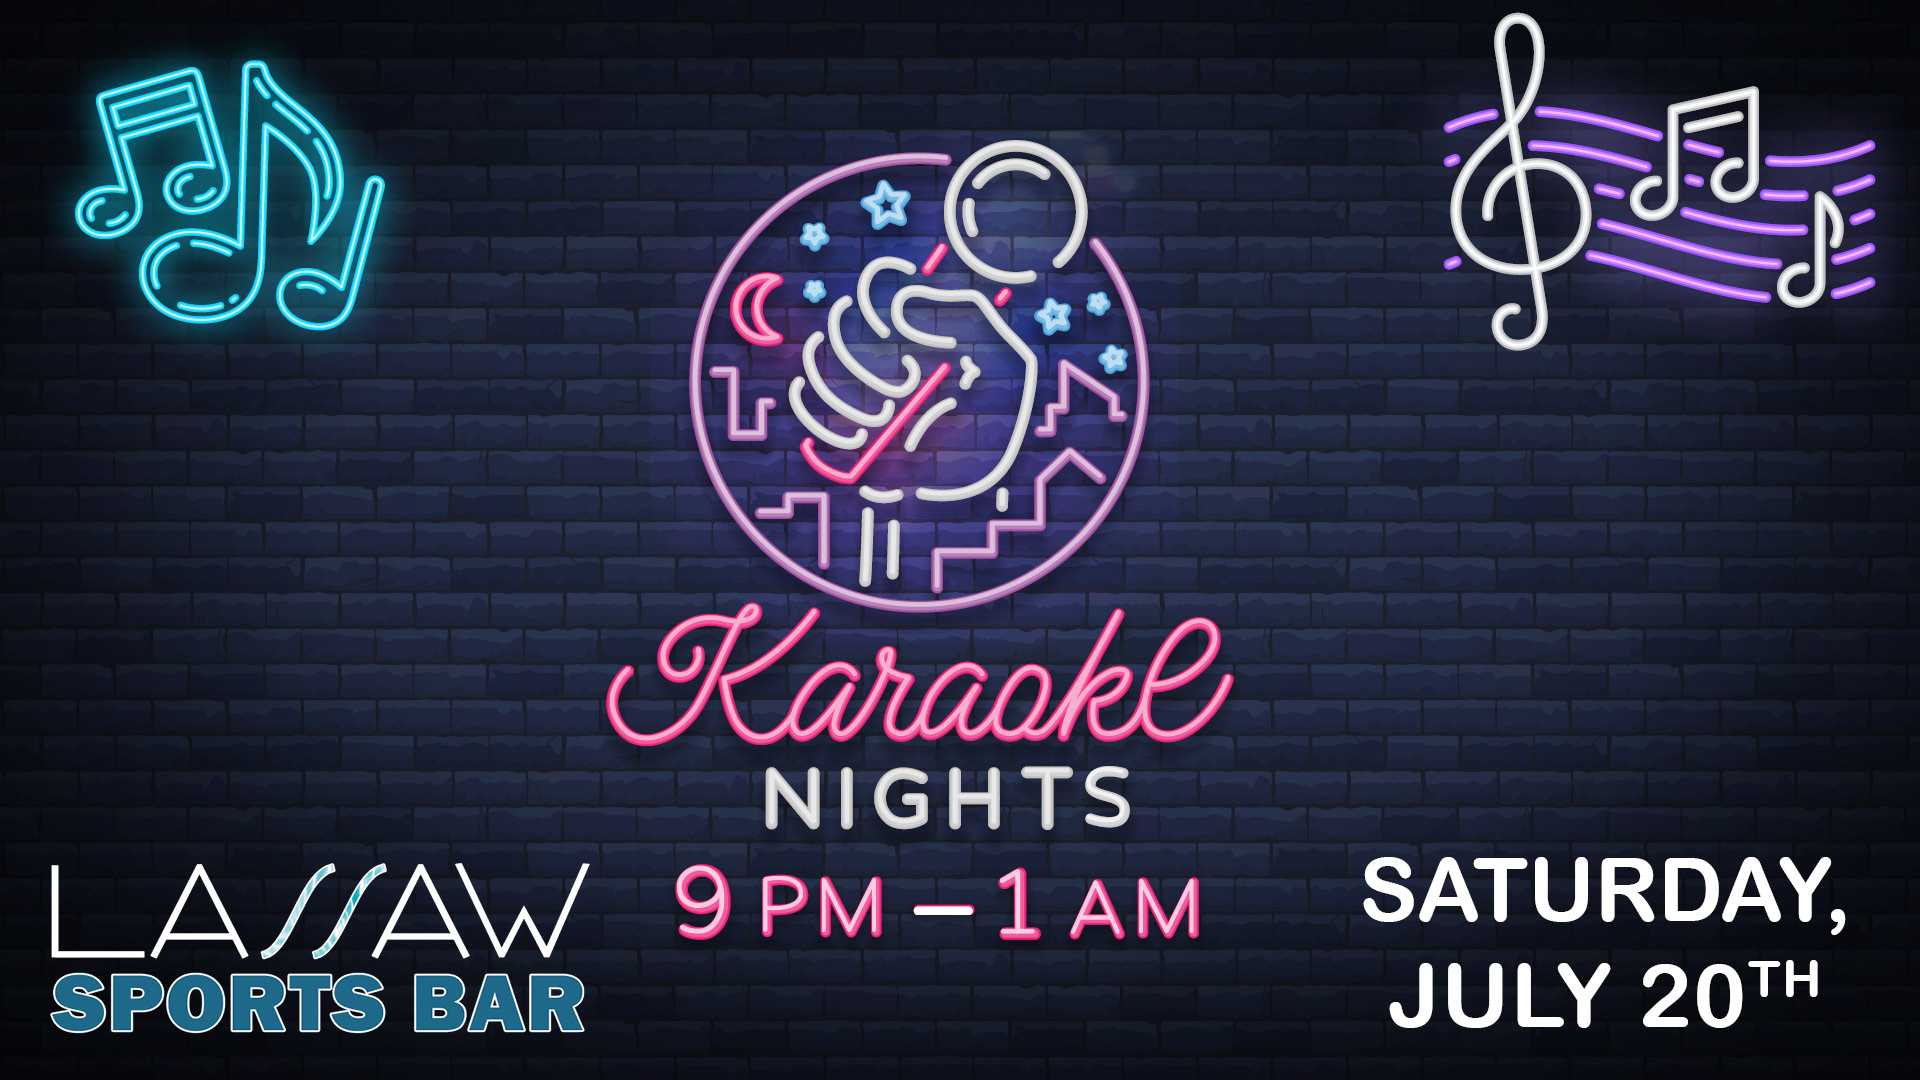 Karaoke night, karaoke, karaoke at lassaw, karaoke at Gray Wolf Peak Casino, Karaoke at Gray Wolf